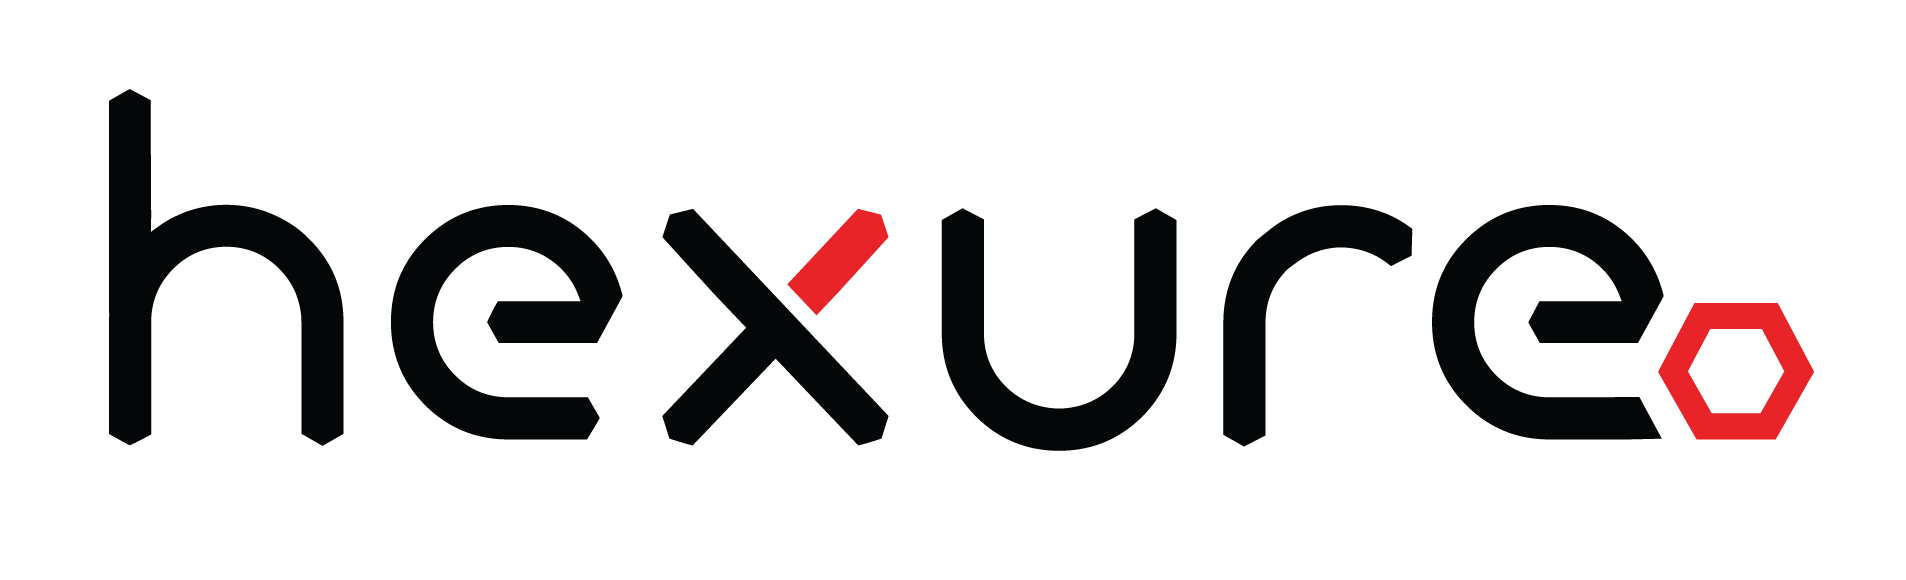 Hexure Logo